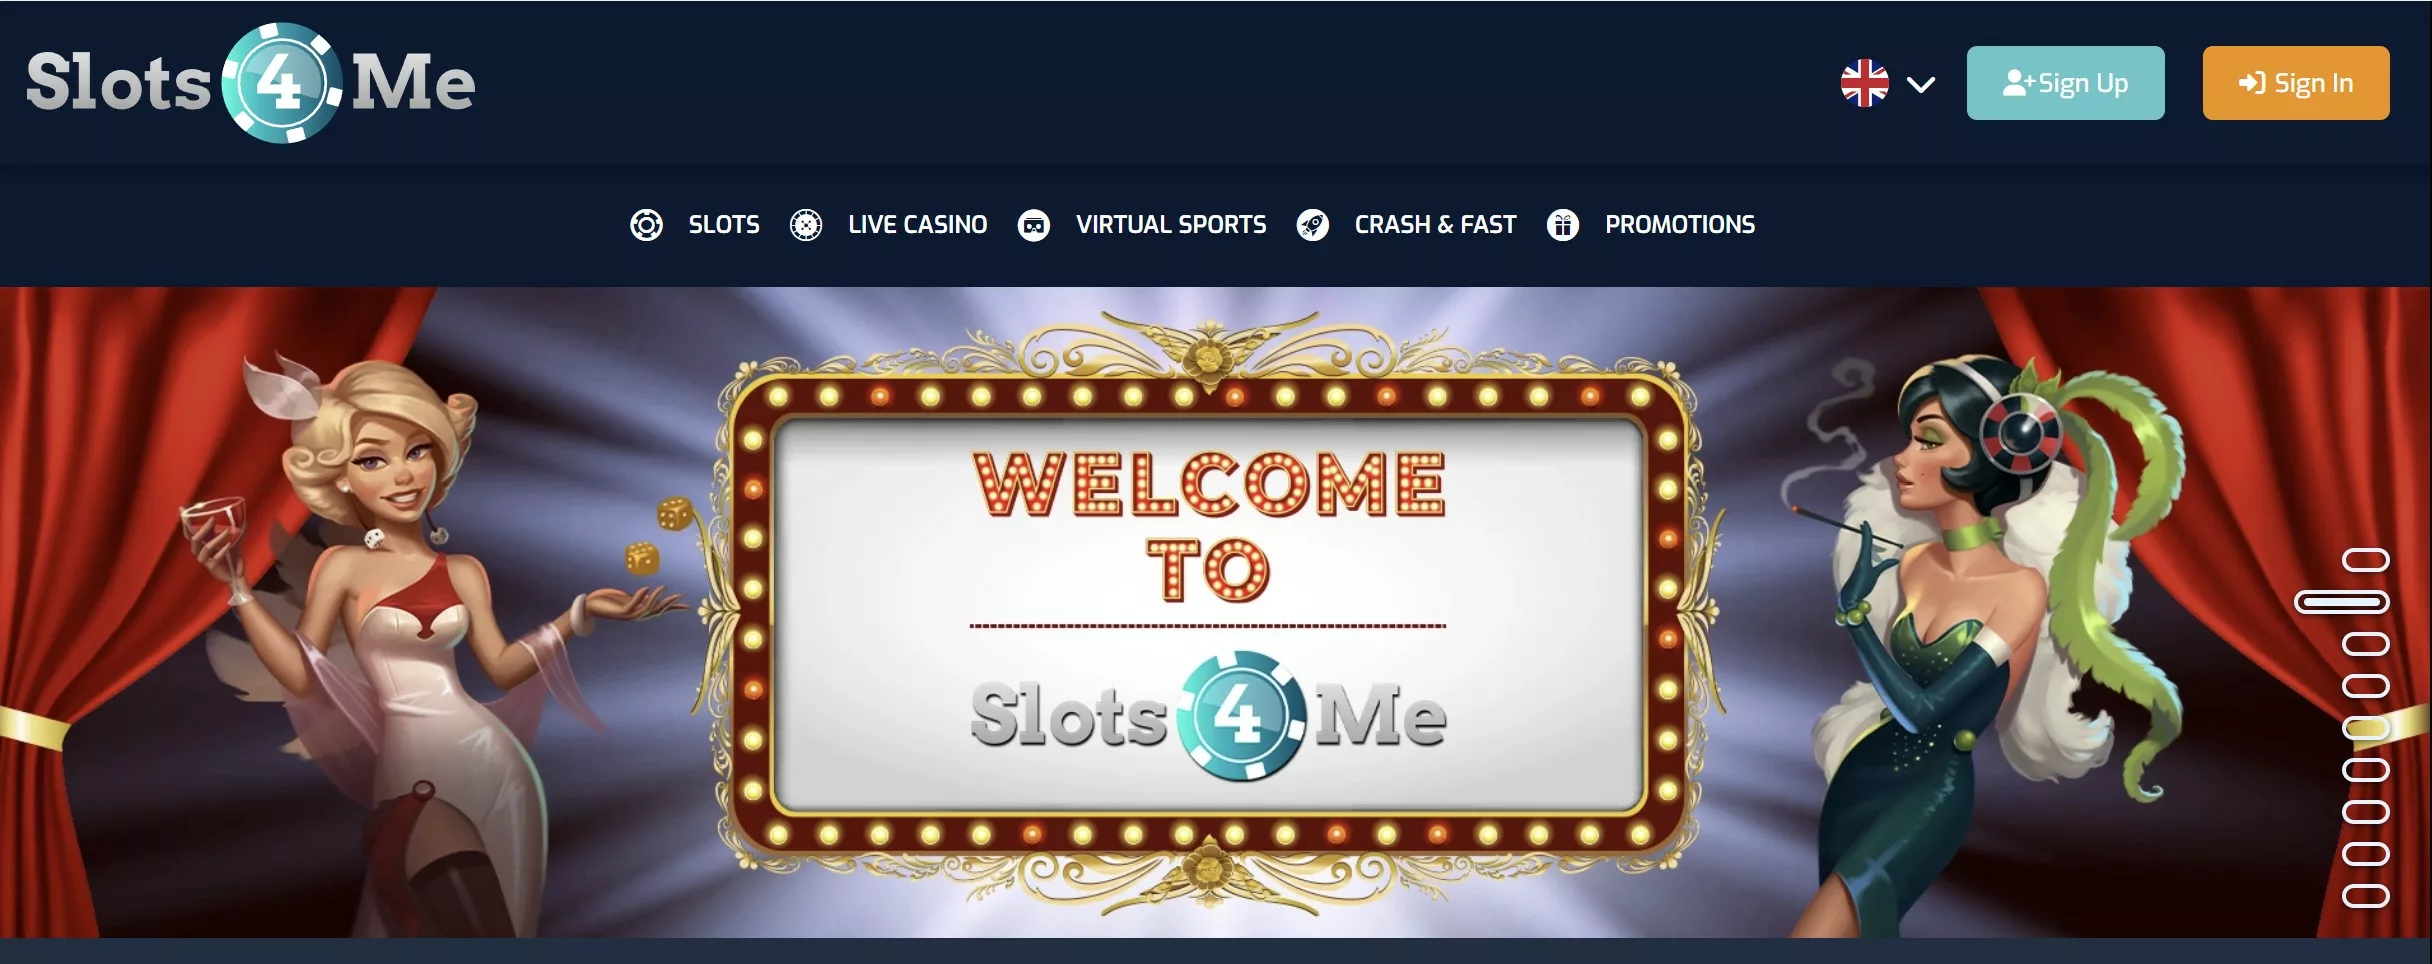 Slots4me Casino